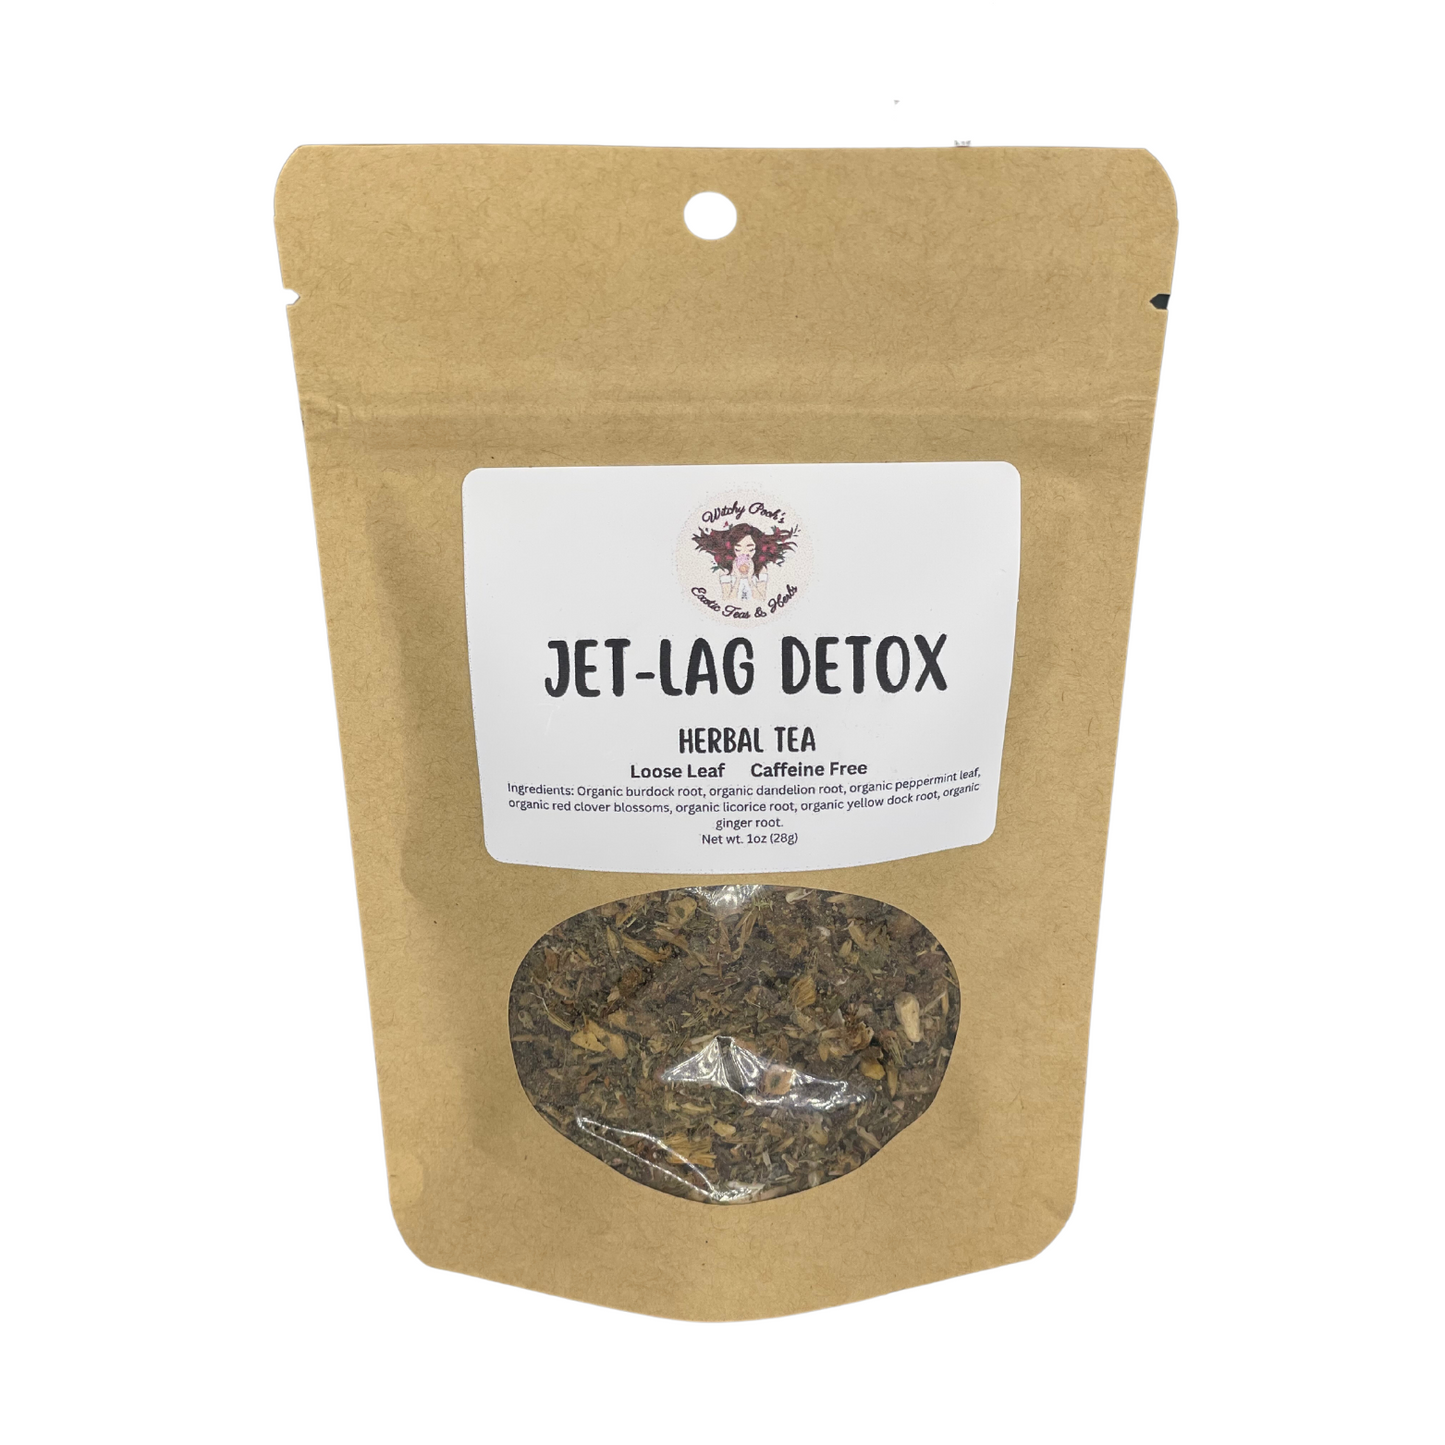 Jet-Lag Relief Loose Leaf Organic Functional Herbal Detox Tea, Caffeine Free, For Jet Lag Relief